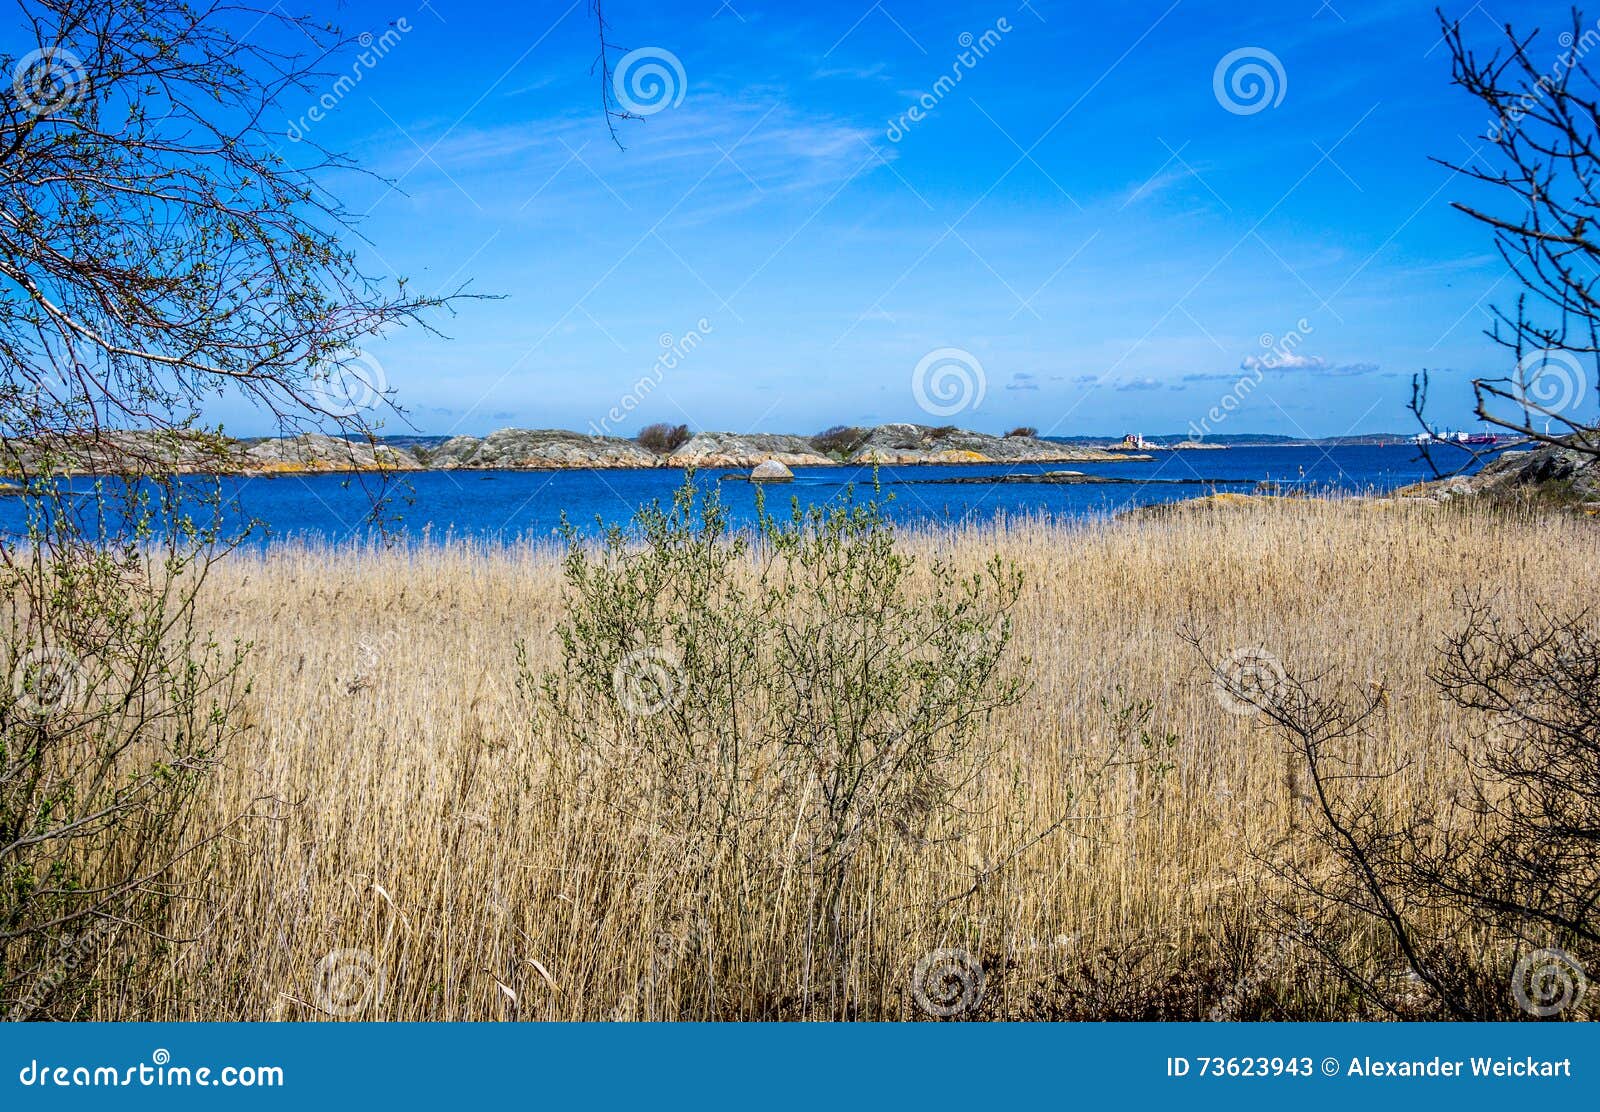 Islands with Nature - Gothenburg, Sweden. Stock Image - Image of lake, 73623943